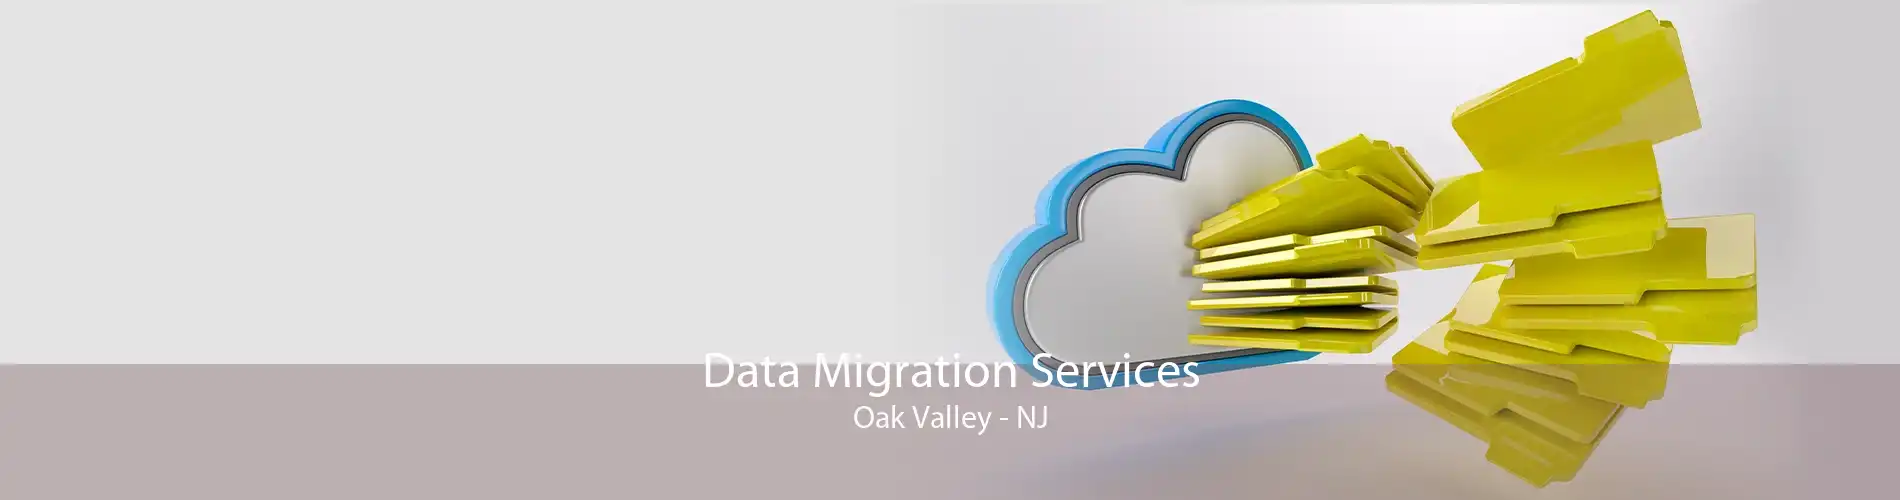 Data Migration Services Oak Valley - NJ